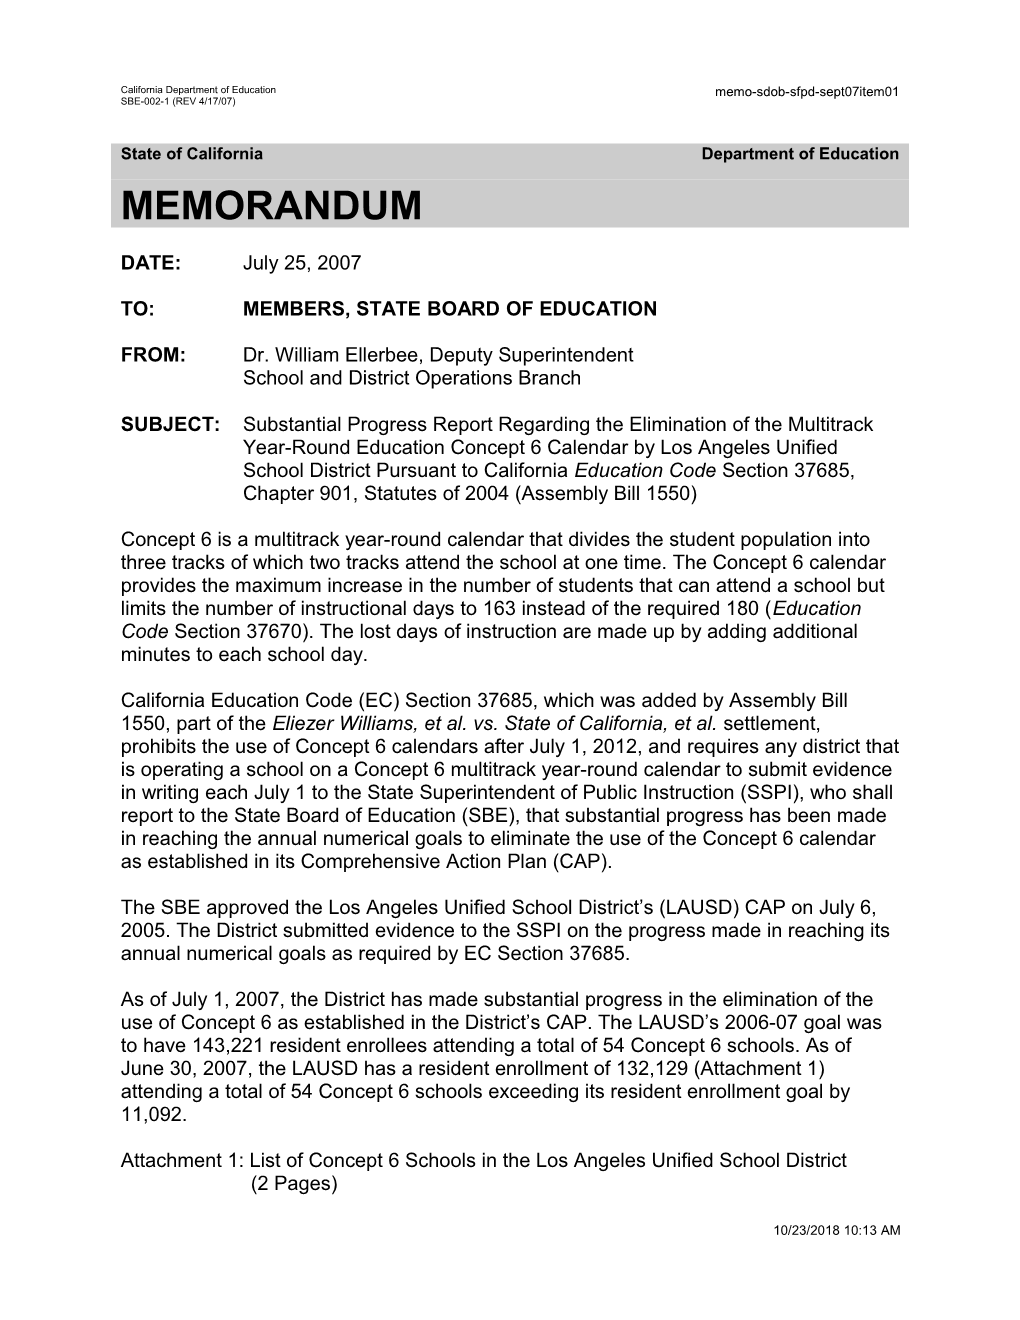 August 2007 SFPD Item 01 - Information Memorandum (CA State Board of Education)